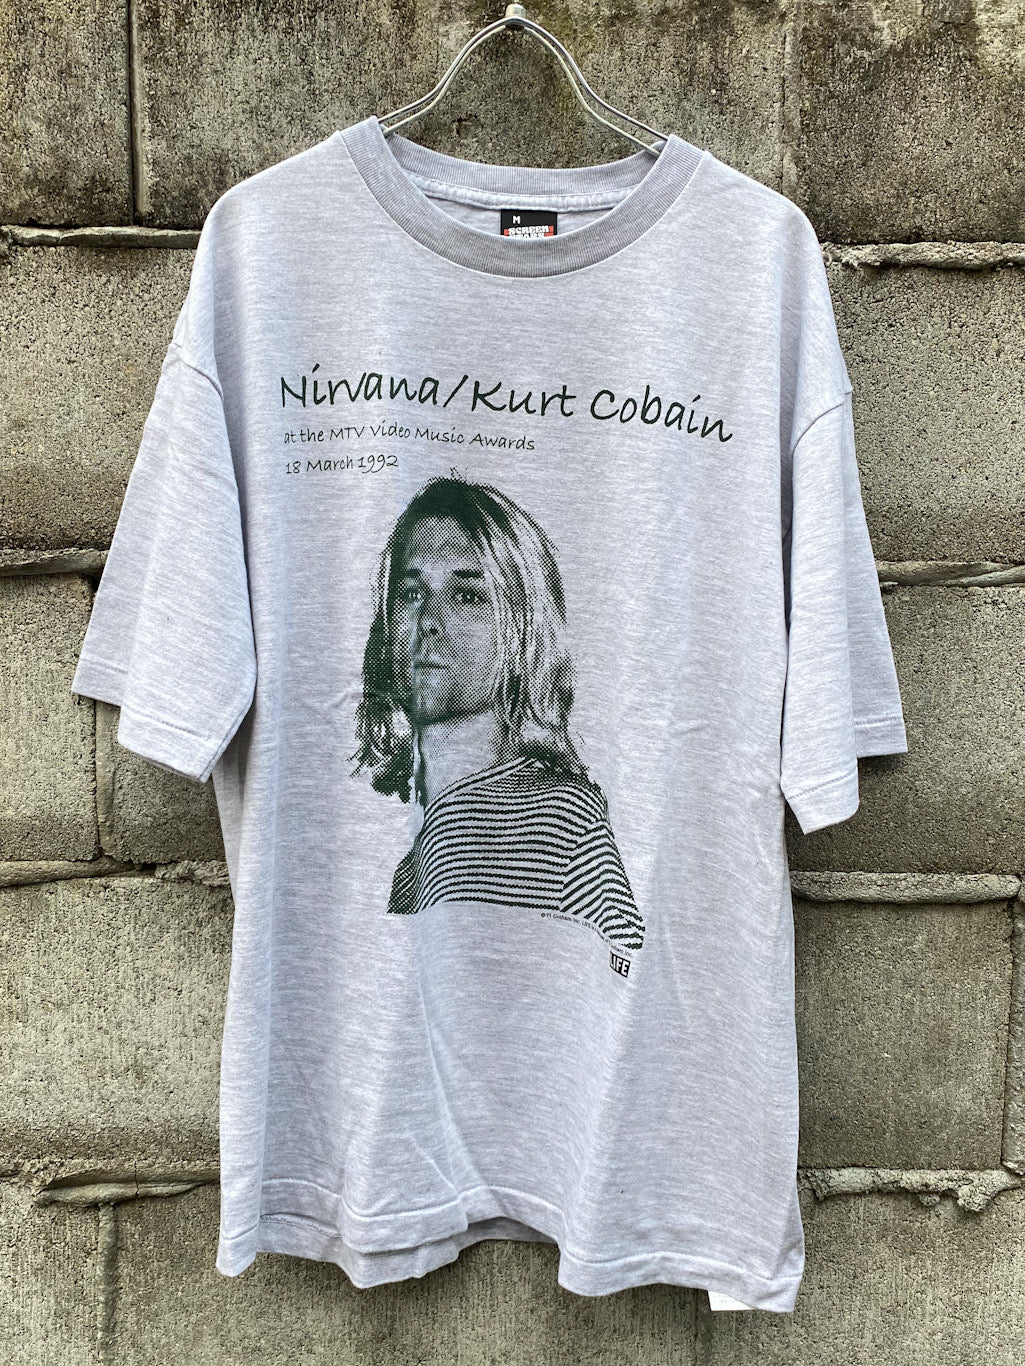 "Kurt Cobain/カート・コバーン" S/S tee